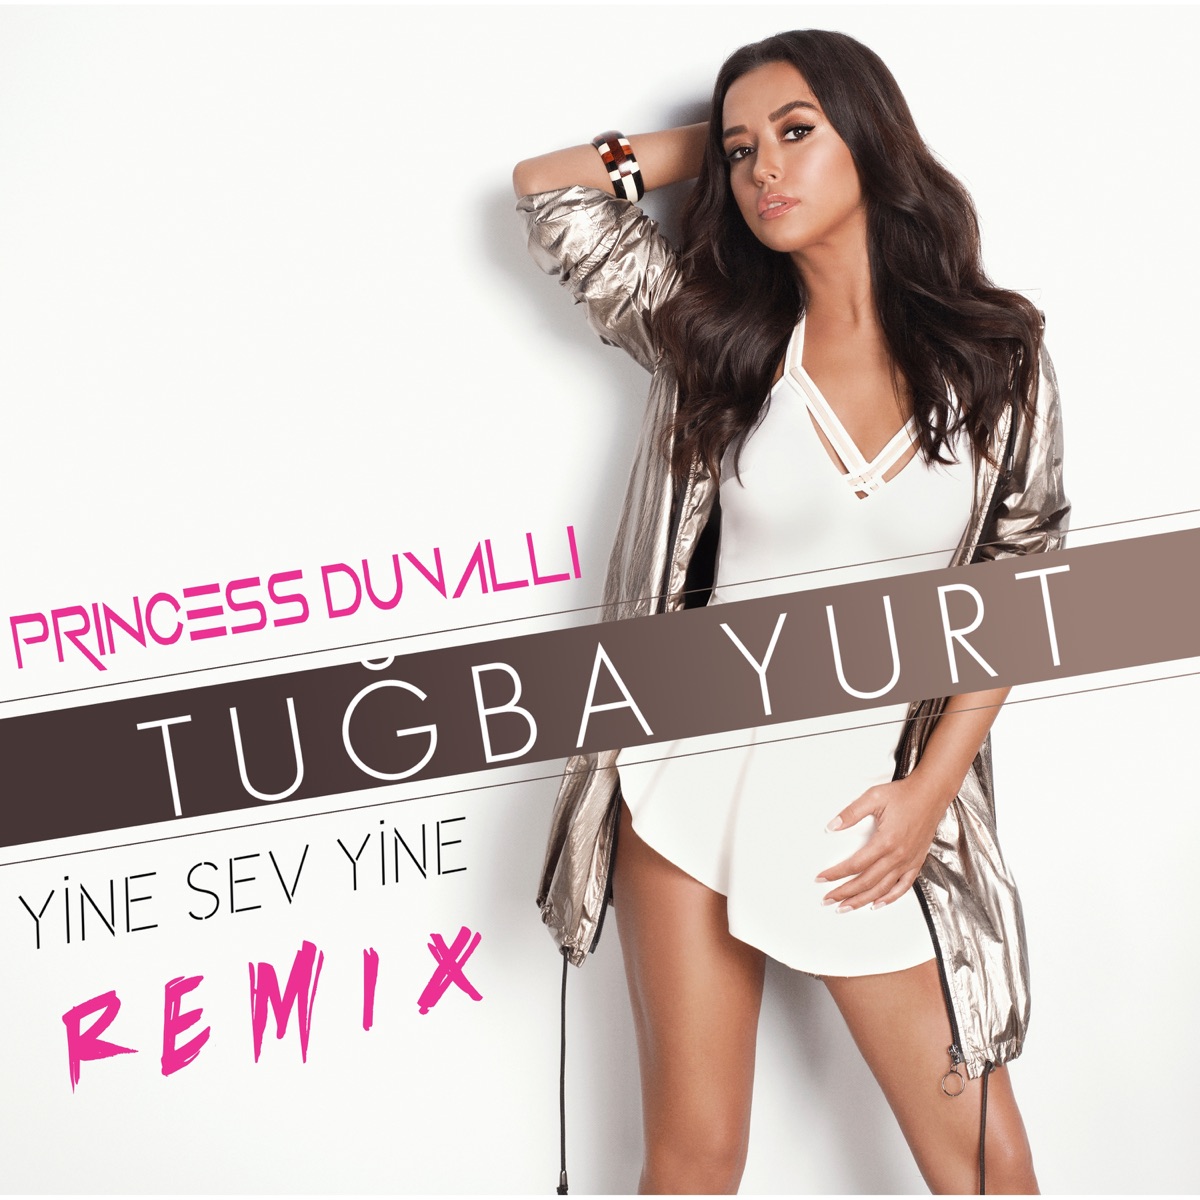 Benim O - Single by Tuğba Yurt on Apple Music